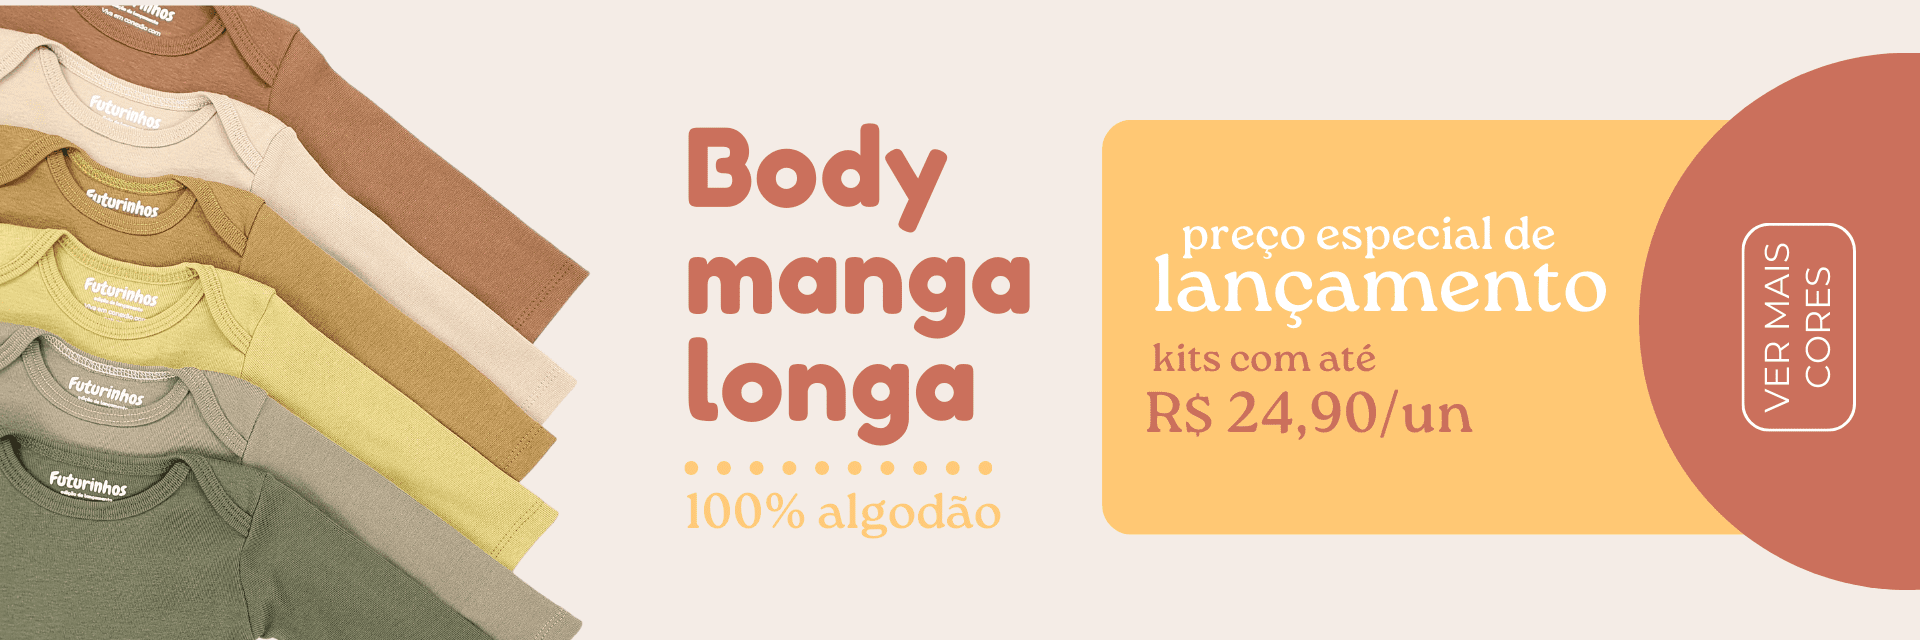 Body manga longa